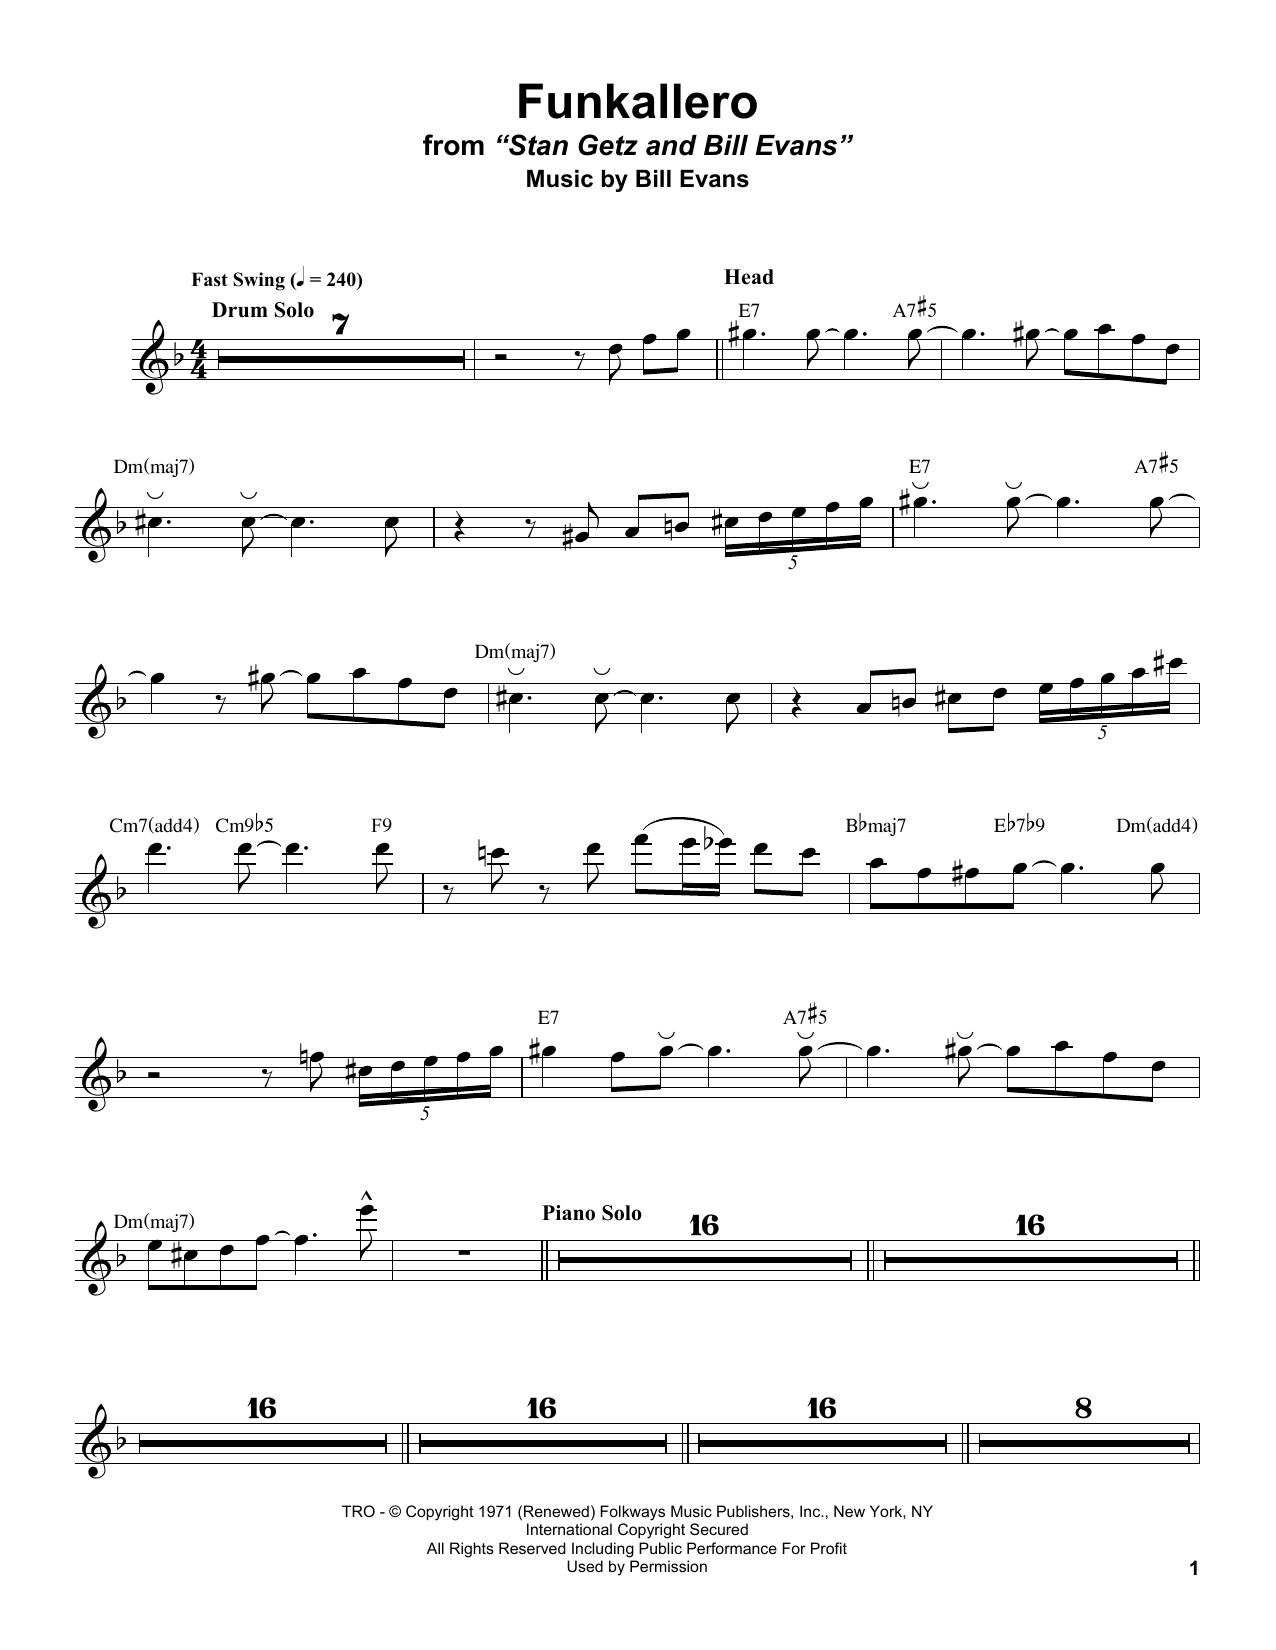 Stan Getz Funkallero Sheet Music Notes & Chords for Tenor Sax Transcription - Download or Print PDF